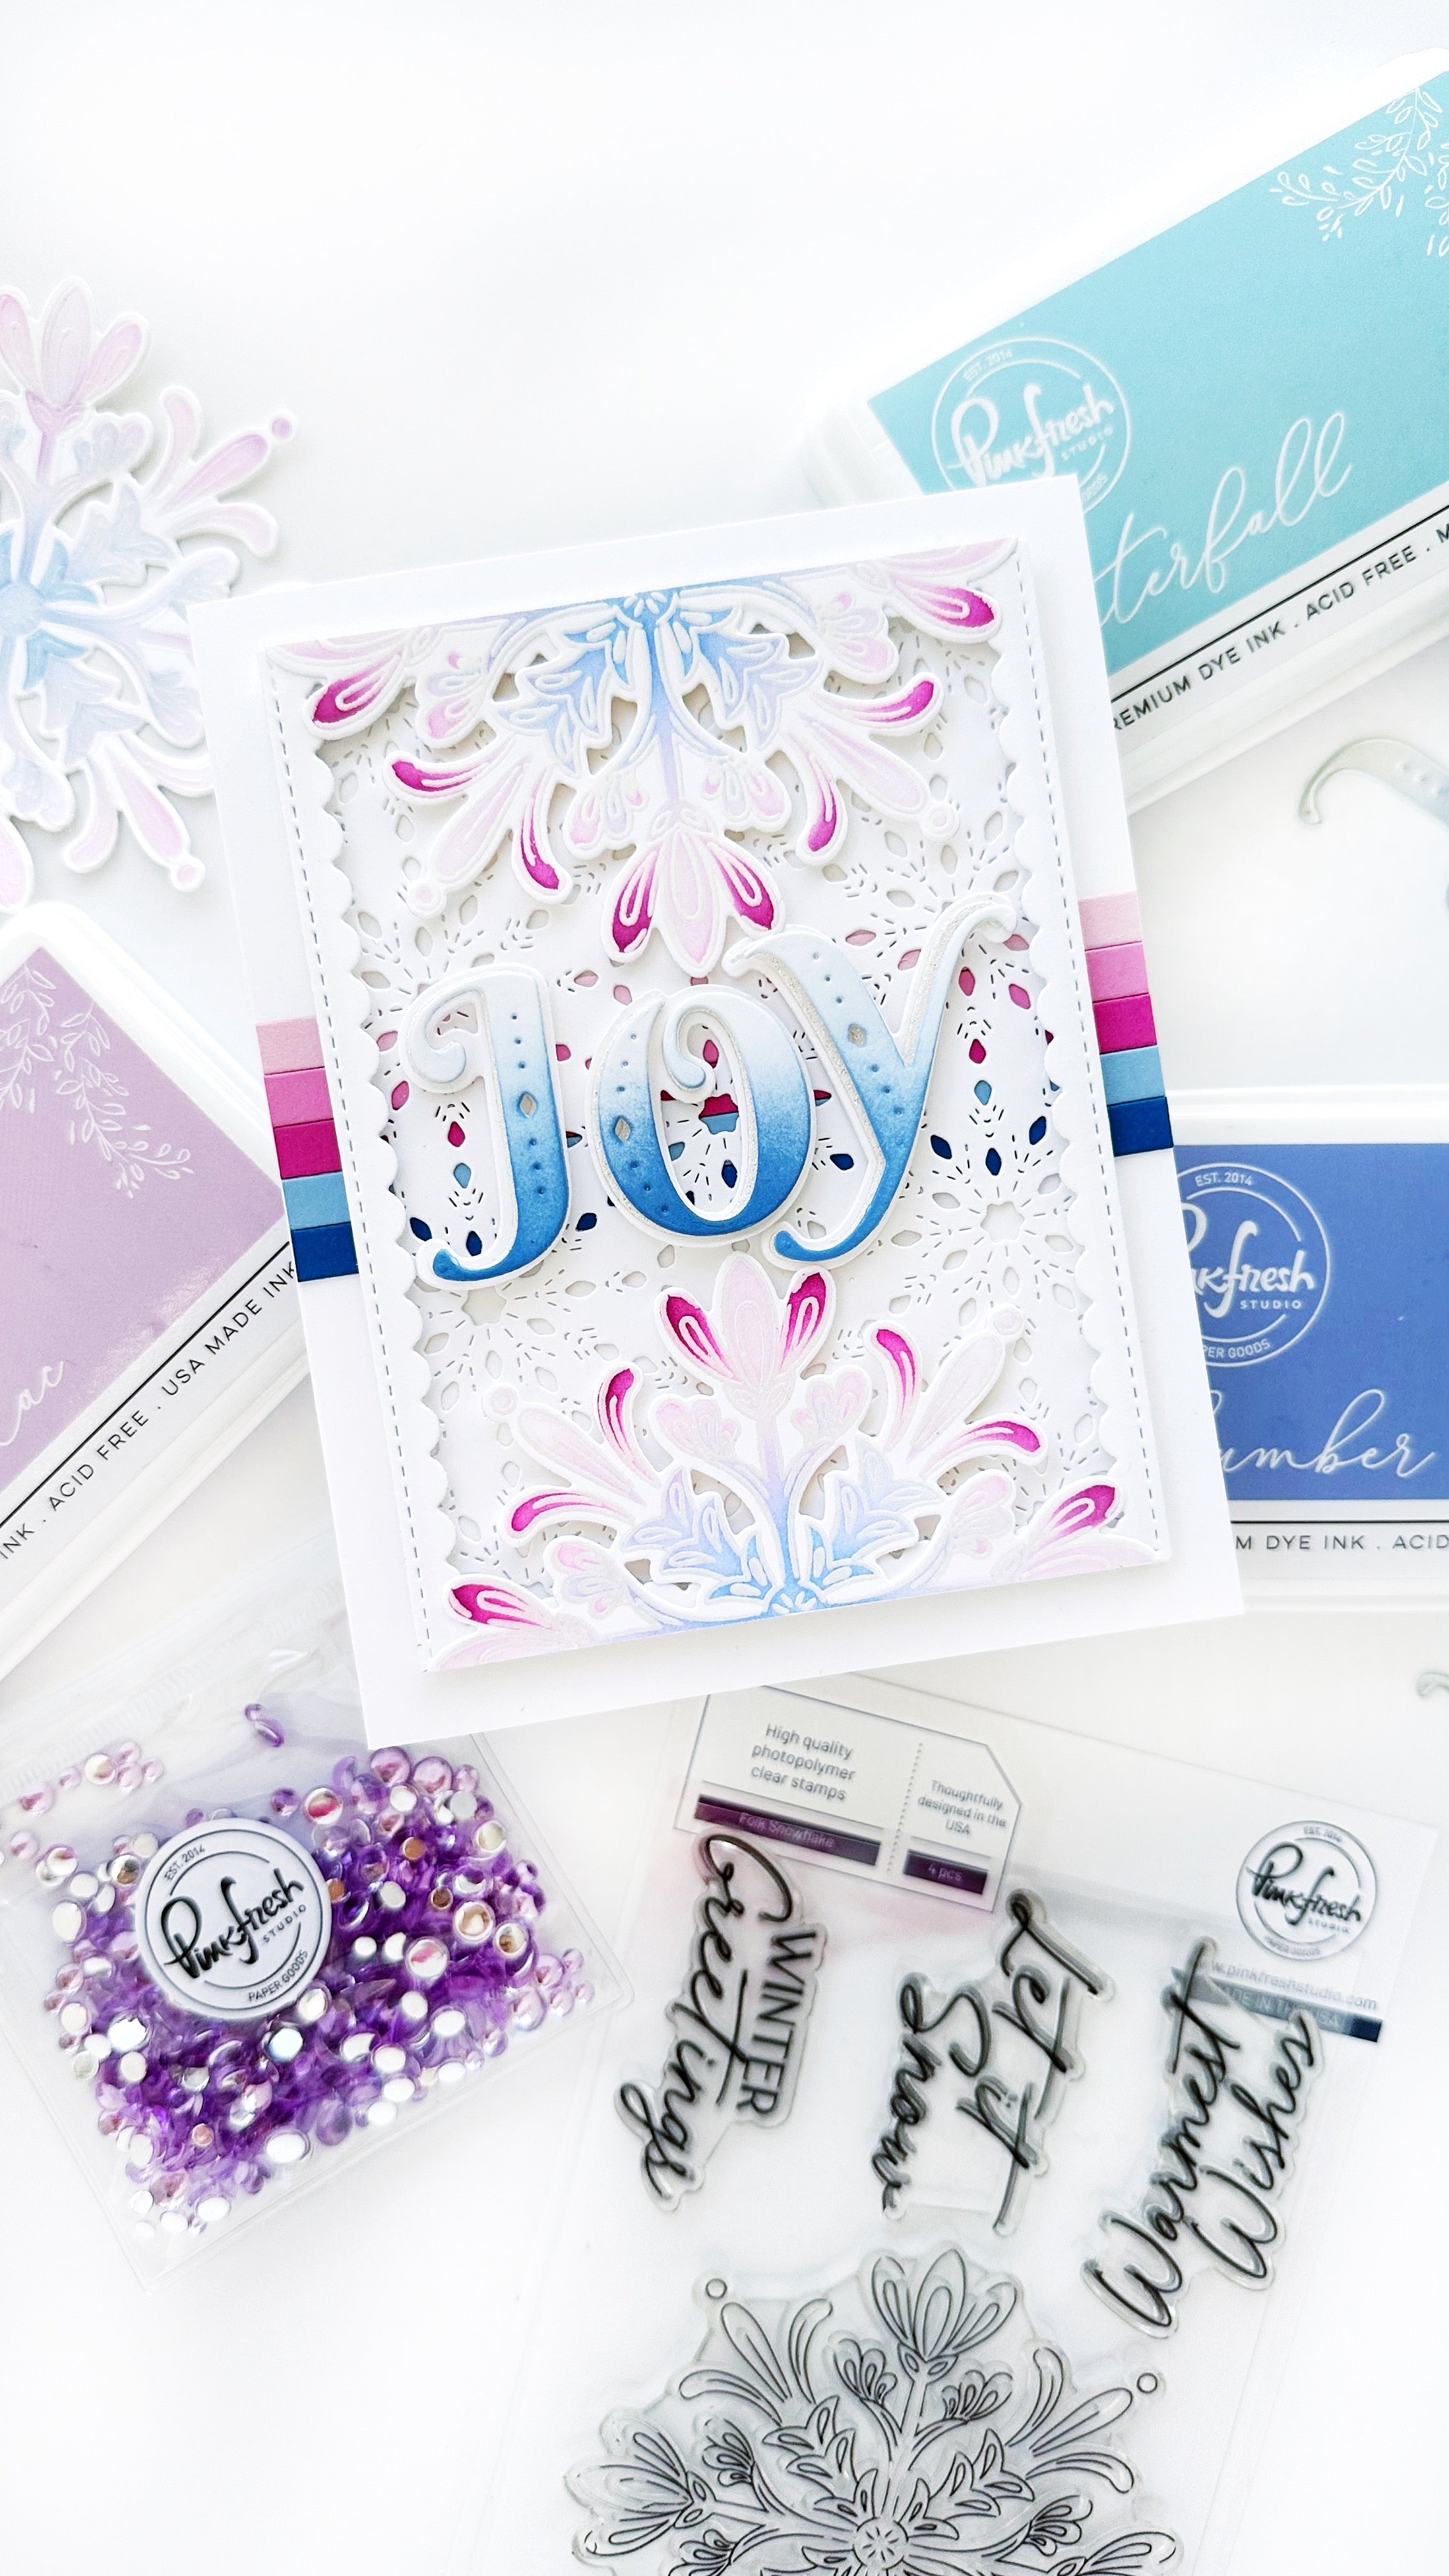 Pinkfresh Studio - Clear Stamps - Folk Snowflake